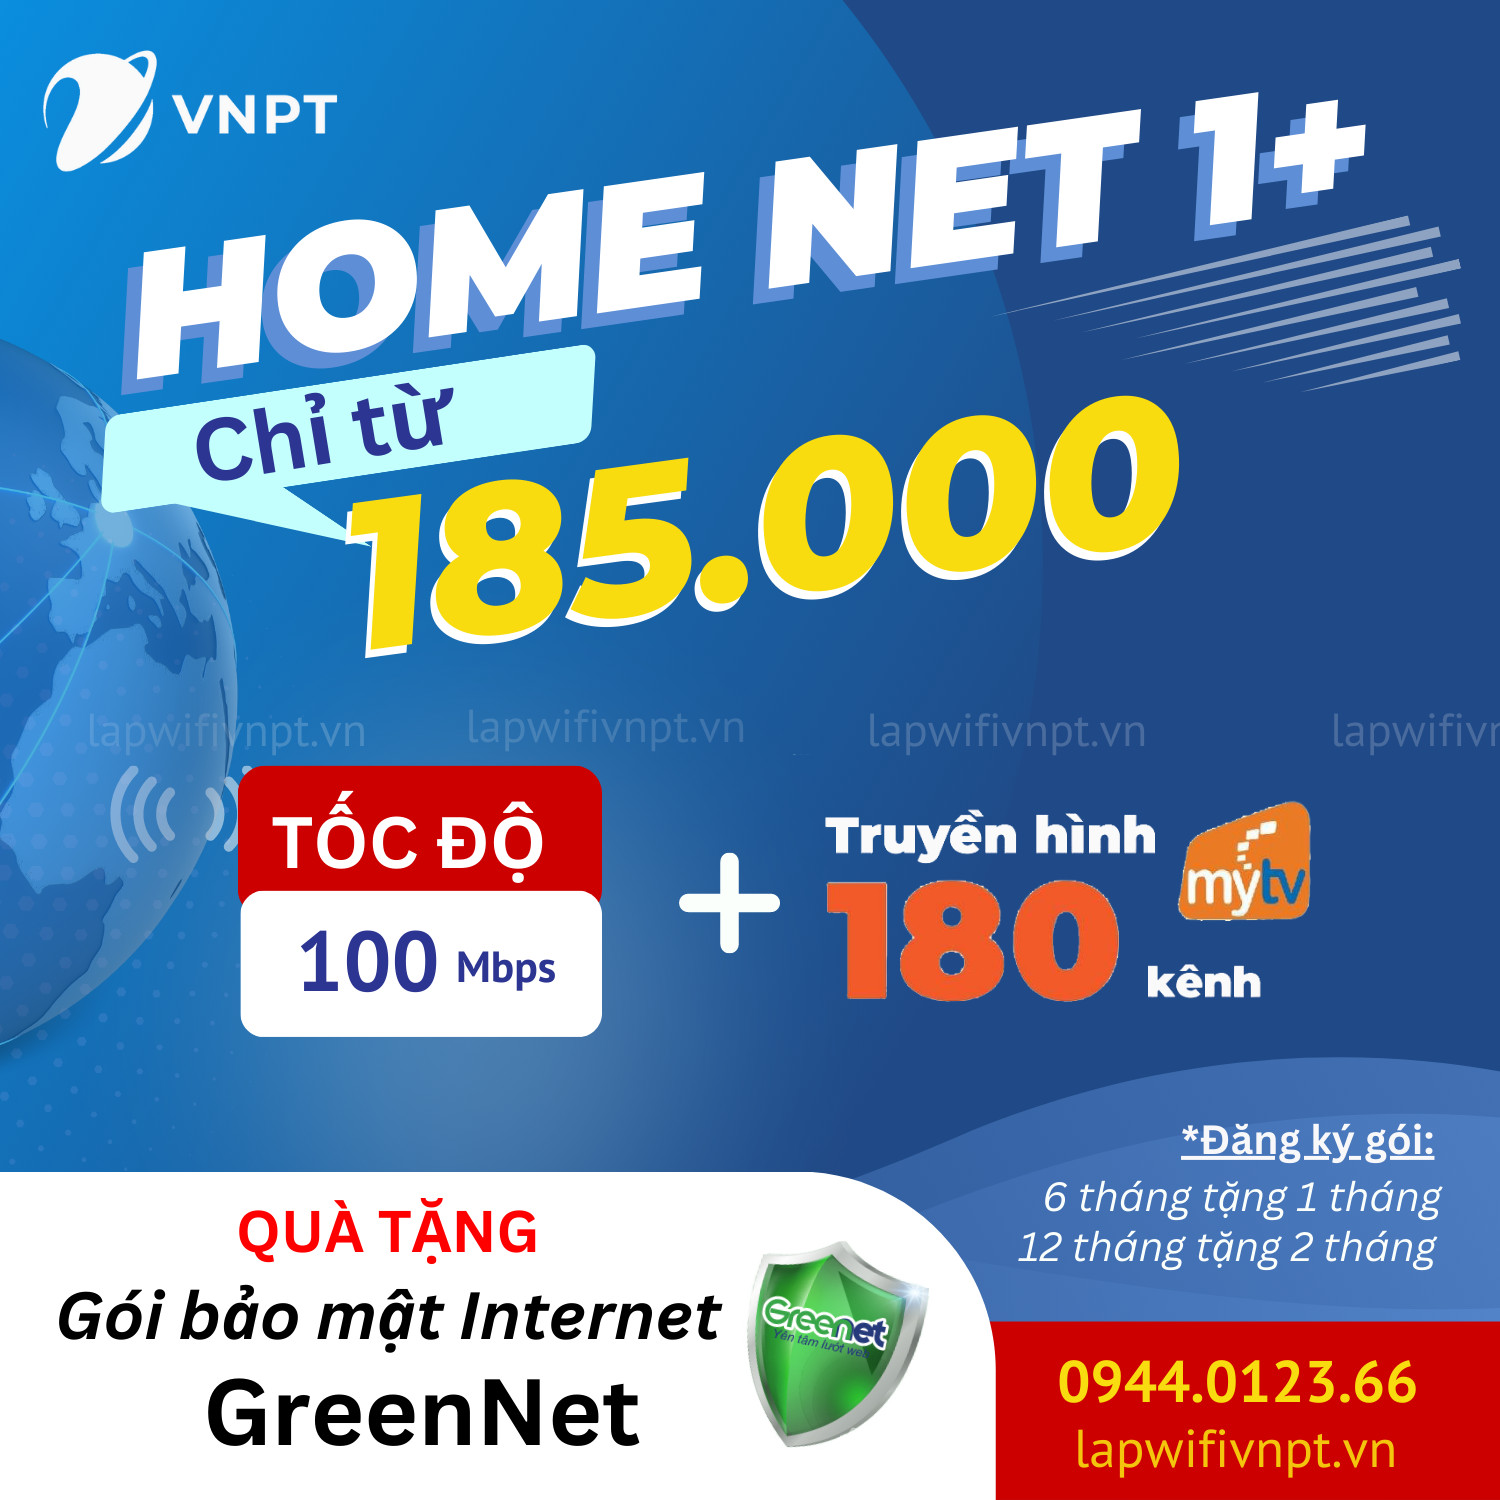 Goi Cuoc Home Net 1 Phus Vnpt, gói cước home net 1 plus vnpt, home net 1+, home net 1+ vnpt,